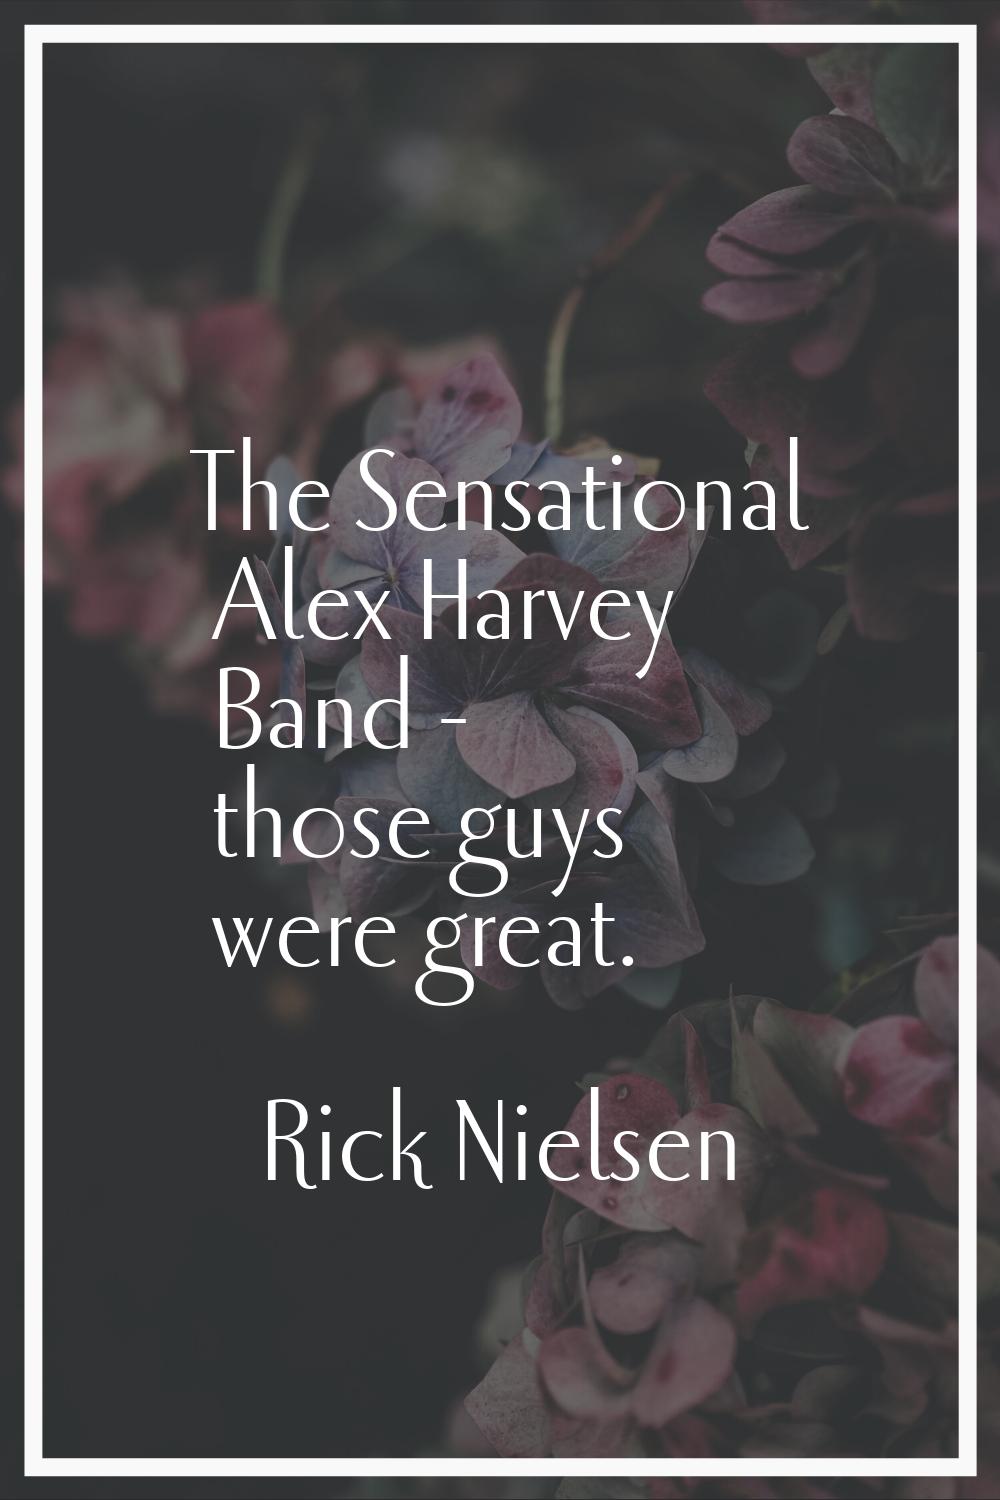 The Sensational Alex Harvey Band - those guys were great.